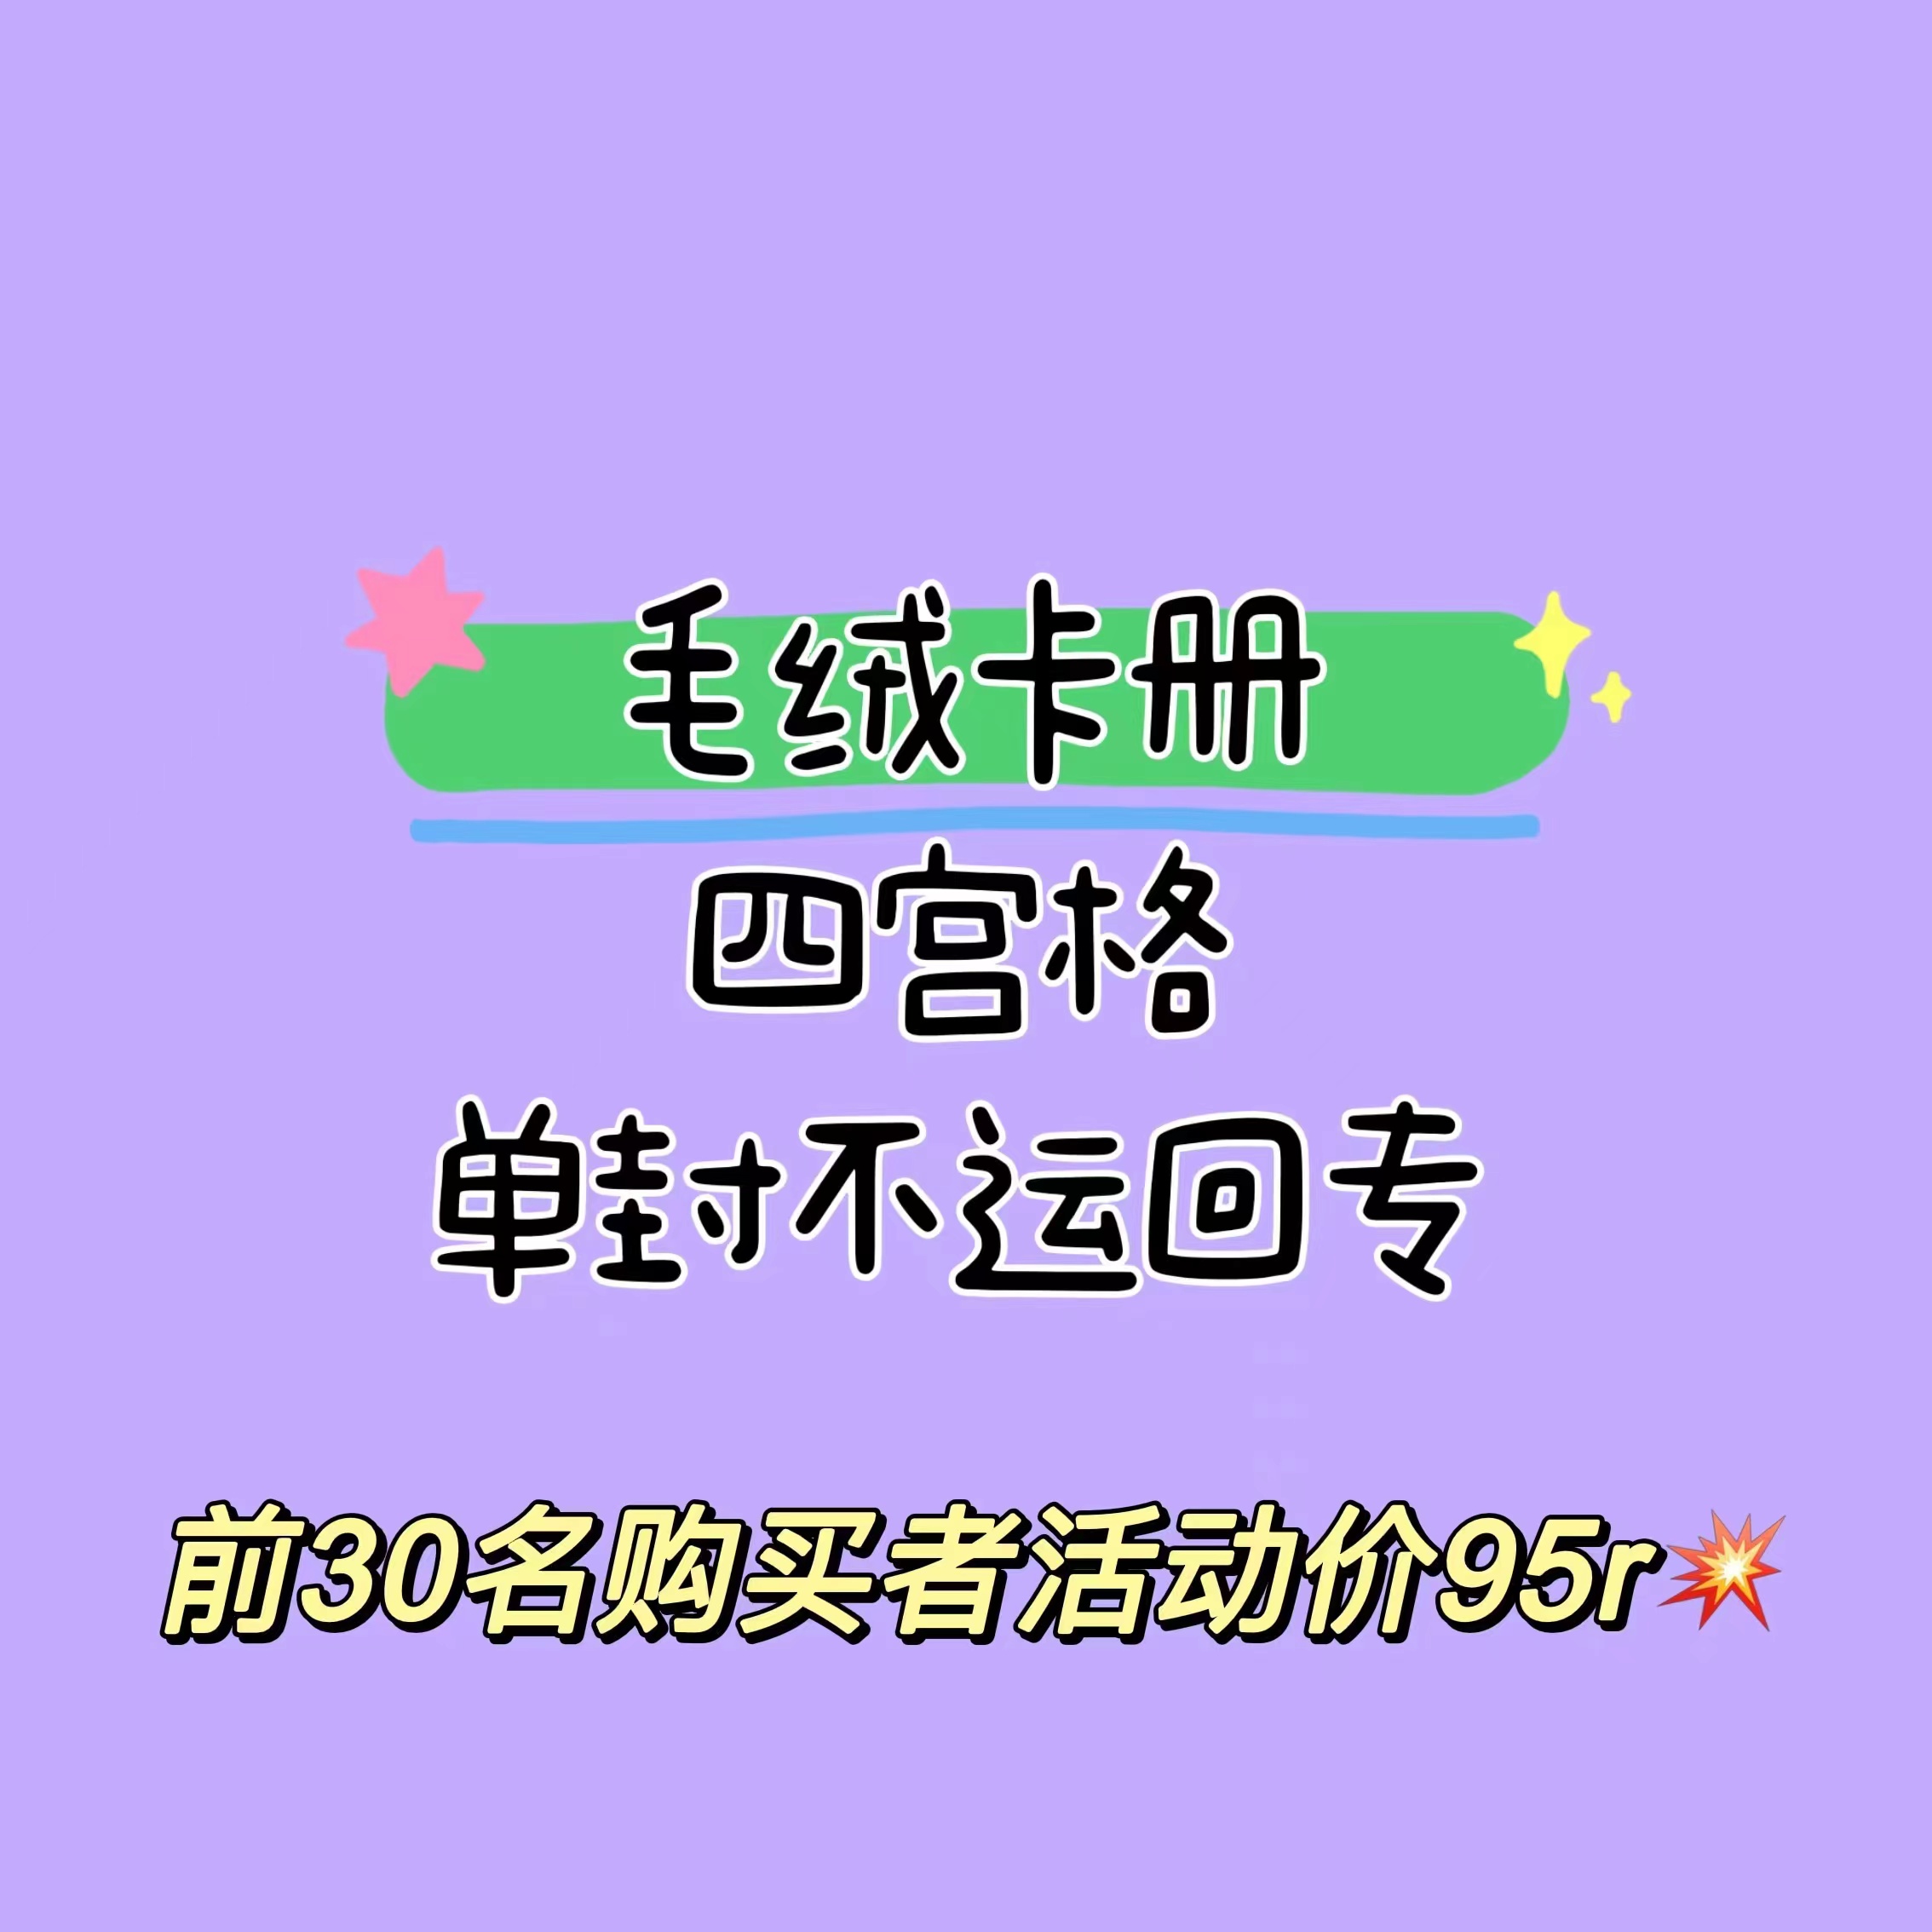 [毛绒卡册特典 拆卡专 *默认yoshi] [Ktown4u Special Gift] TREASURE - 2ND FULL ALBUM [REBOOT] DIGIPACK VER._YOSHINORI·金本芳典